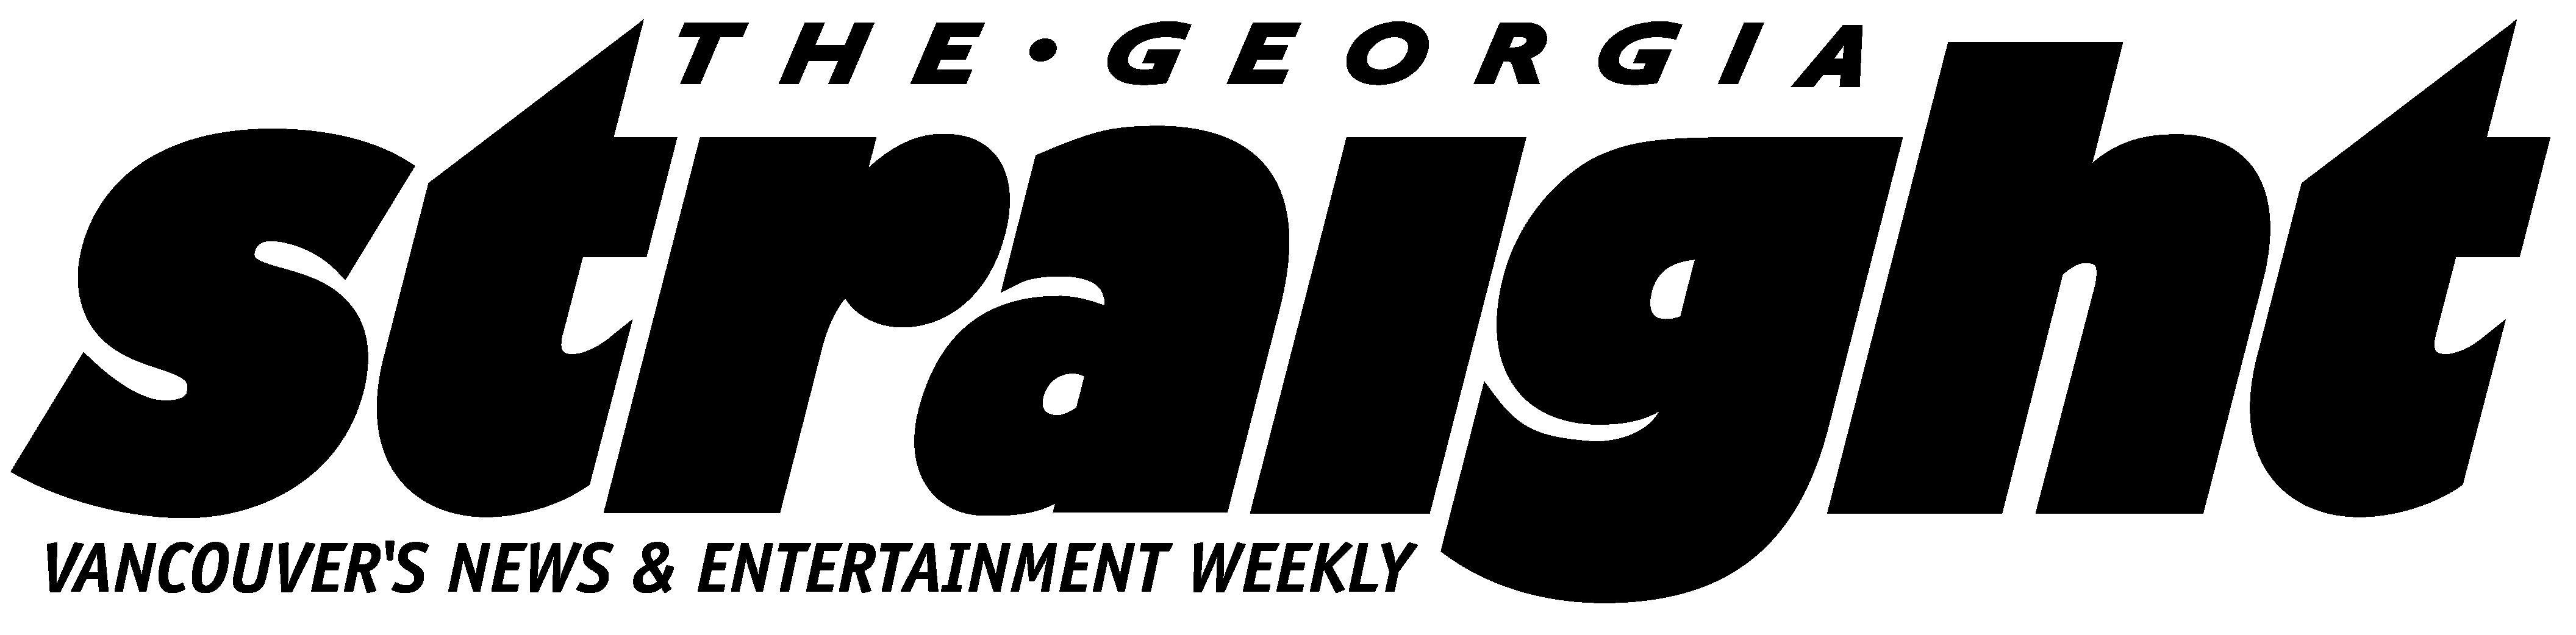 Straight Logo - Georgia Straight Logo Cited